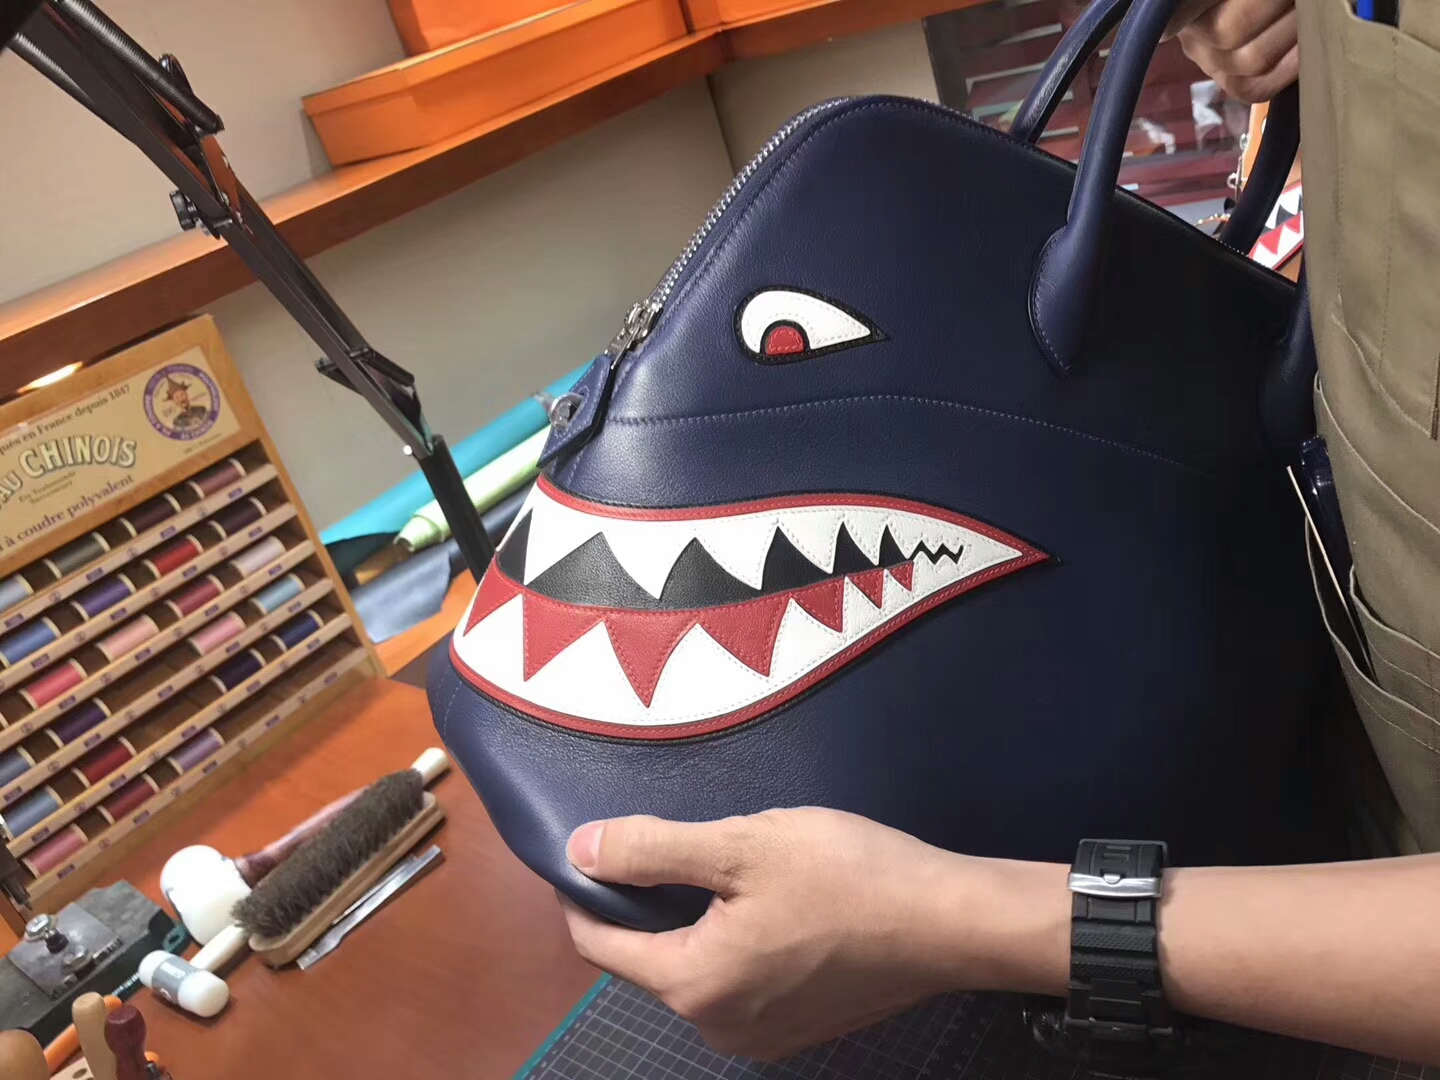 HERMES 爱马仕 鲨鱼保龄球包 配全套专柜原版包装 媲美专柜货源 CC73 宝石蓝 Blue Saphir